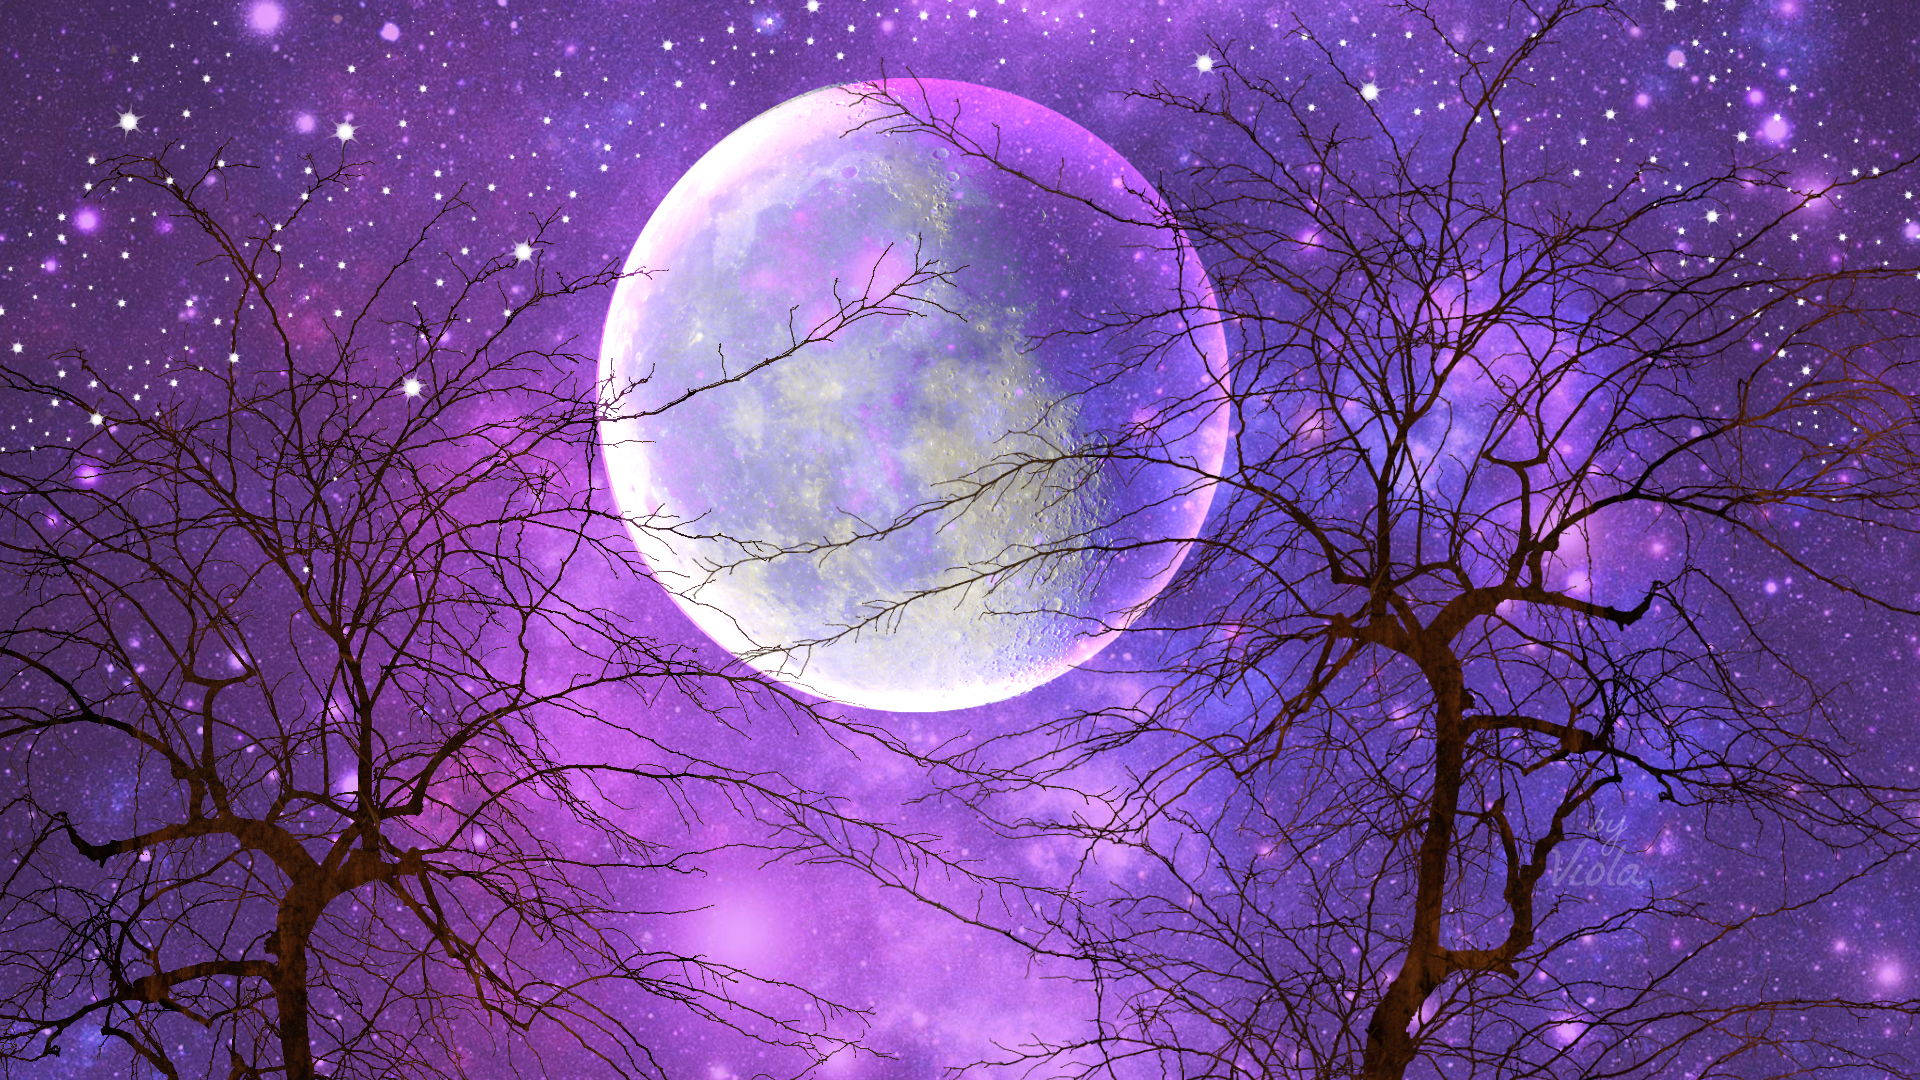 Free Moon Night Sky Wallpaper Downloads, [200+] Moon Night Sky Wallpapers  for FREE 